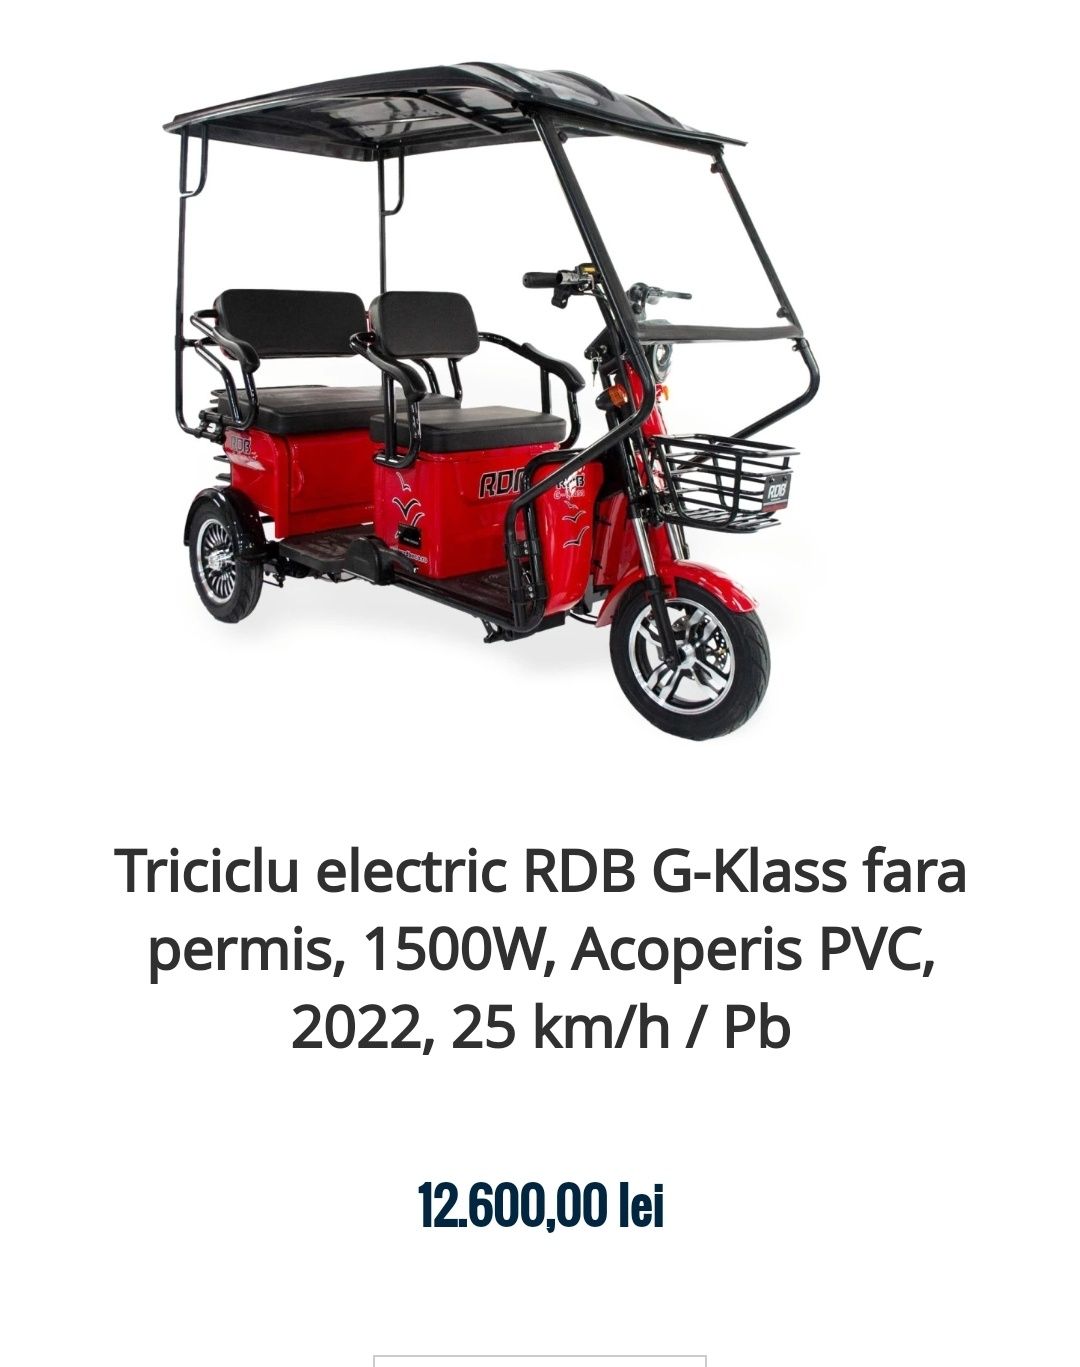 Triciclu electric RDB G-Klass cu acoperis PVC, in garantie